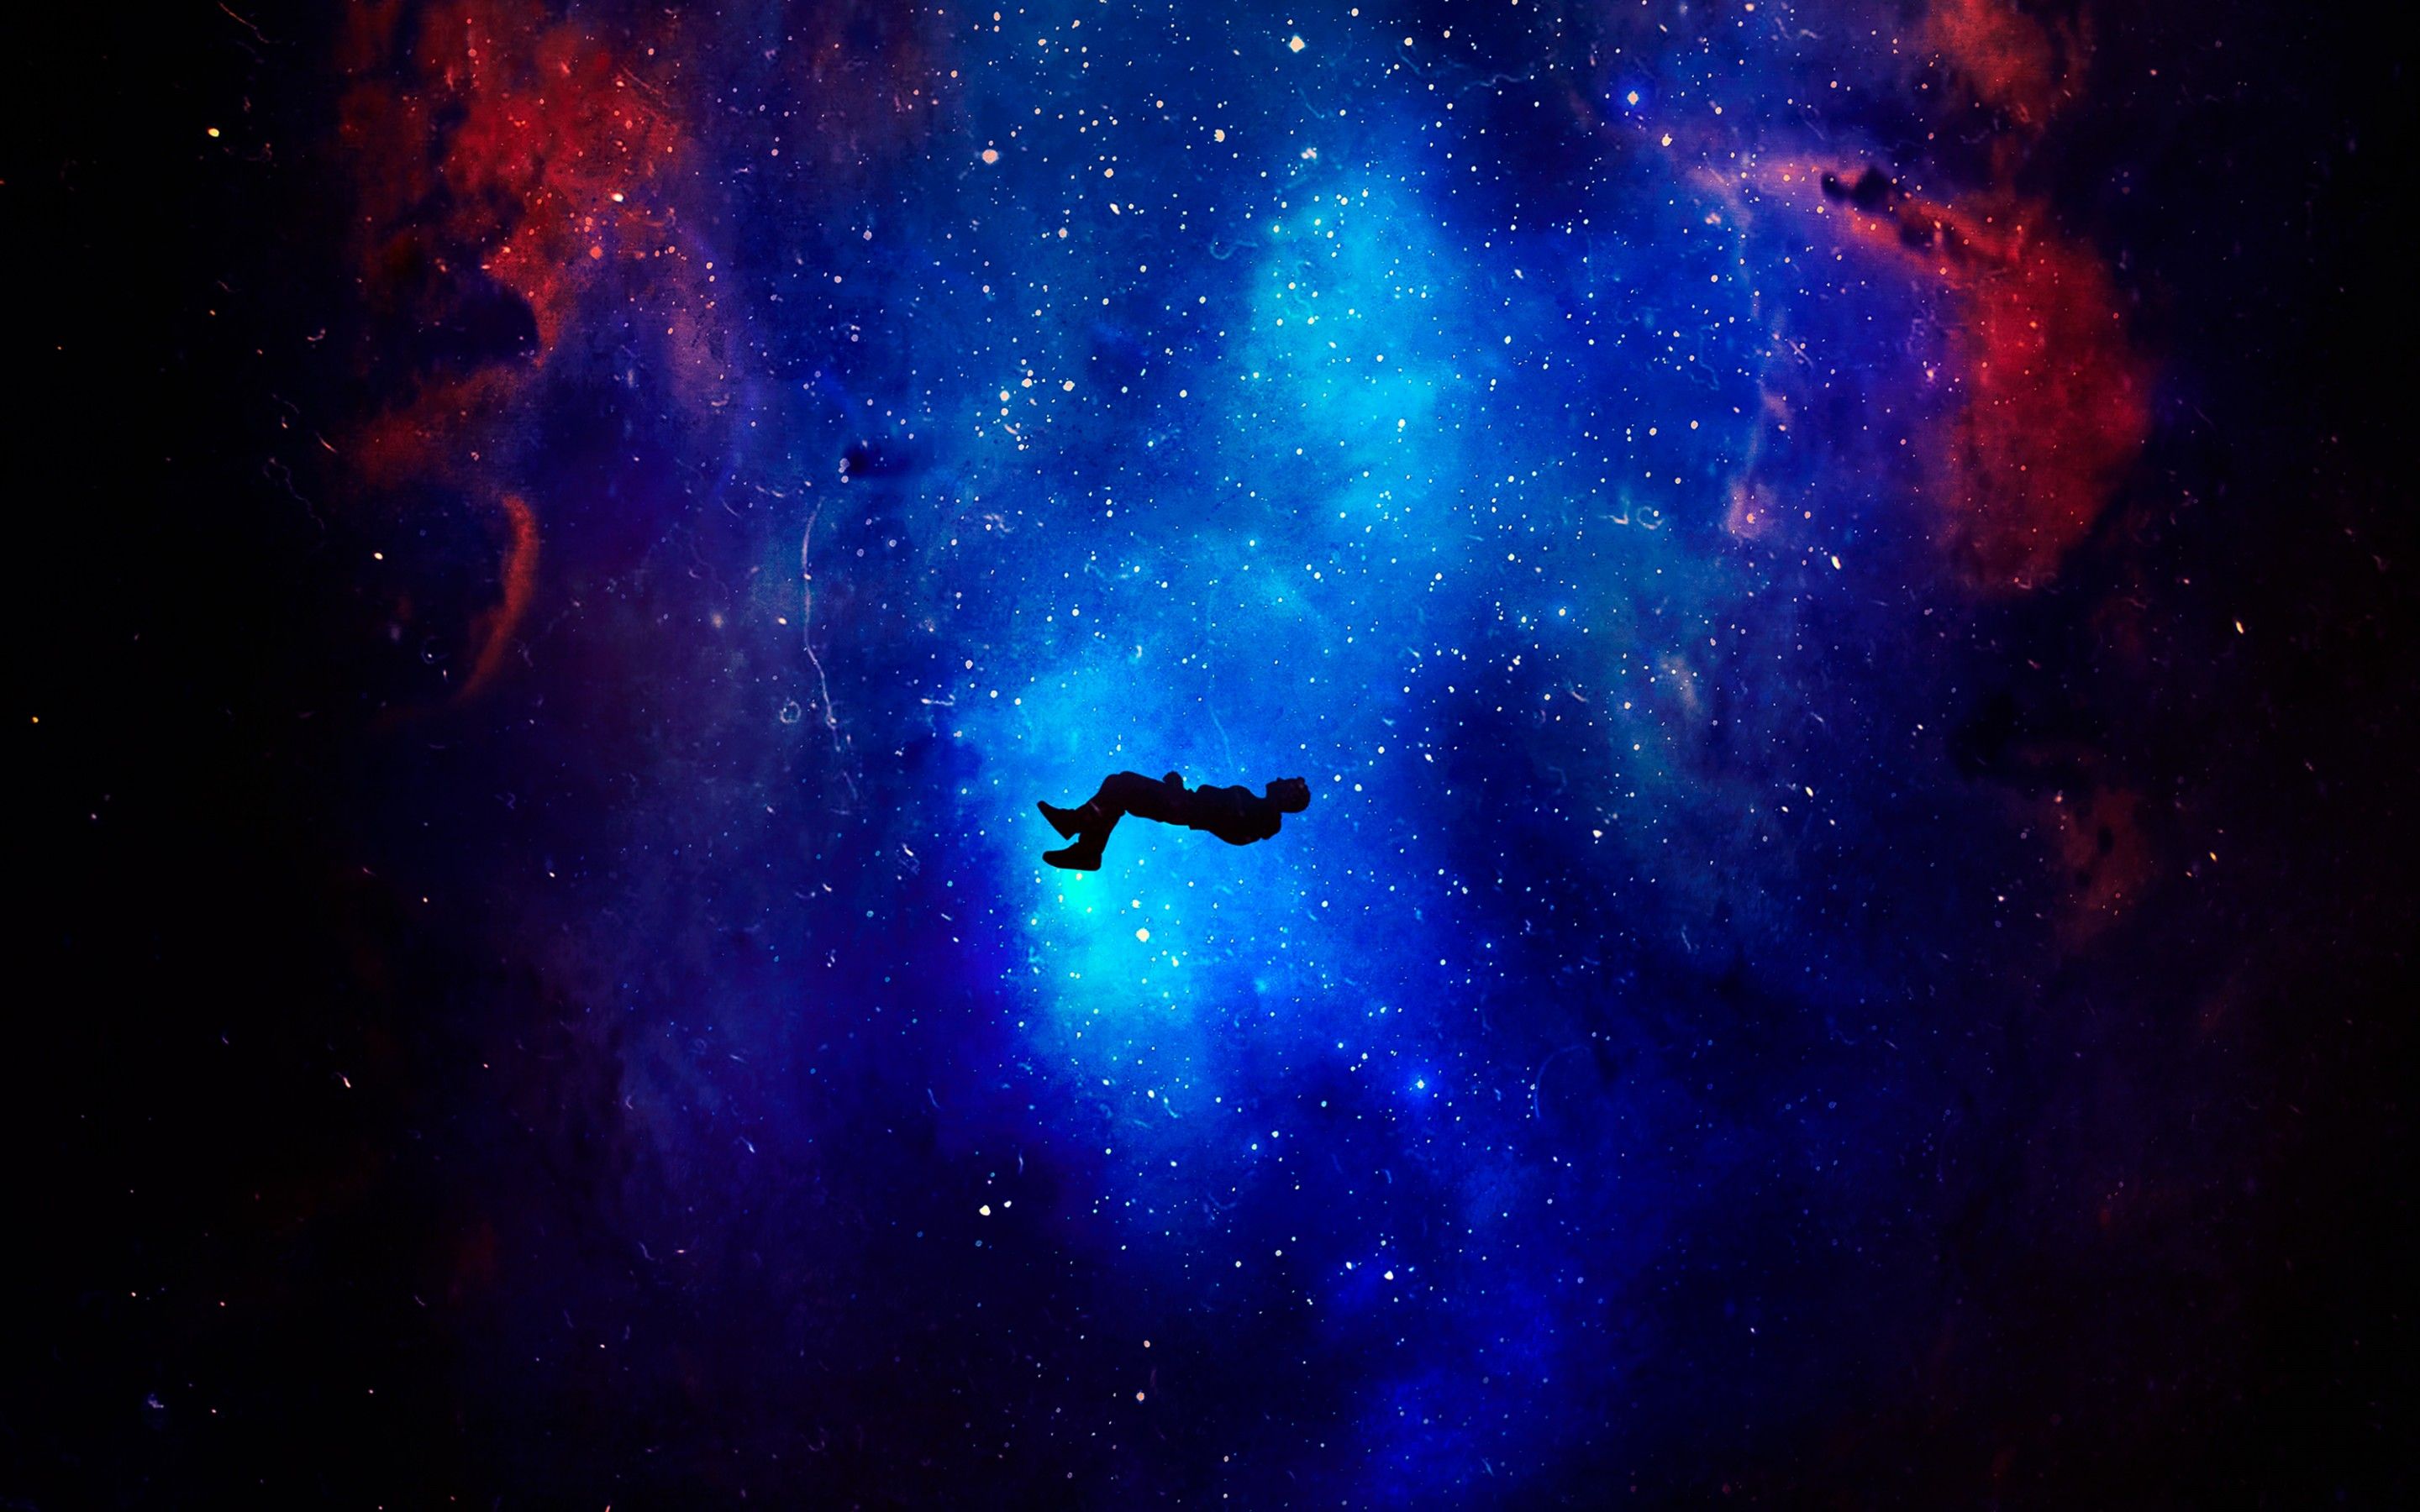 Lost in Space 4K Wallpaper, Alone, Dream, Deep space, Nebula, Fantasy